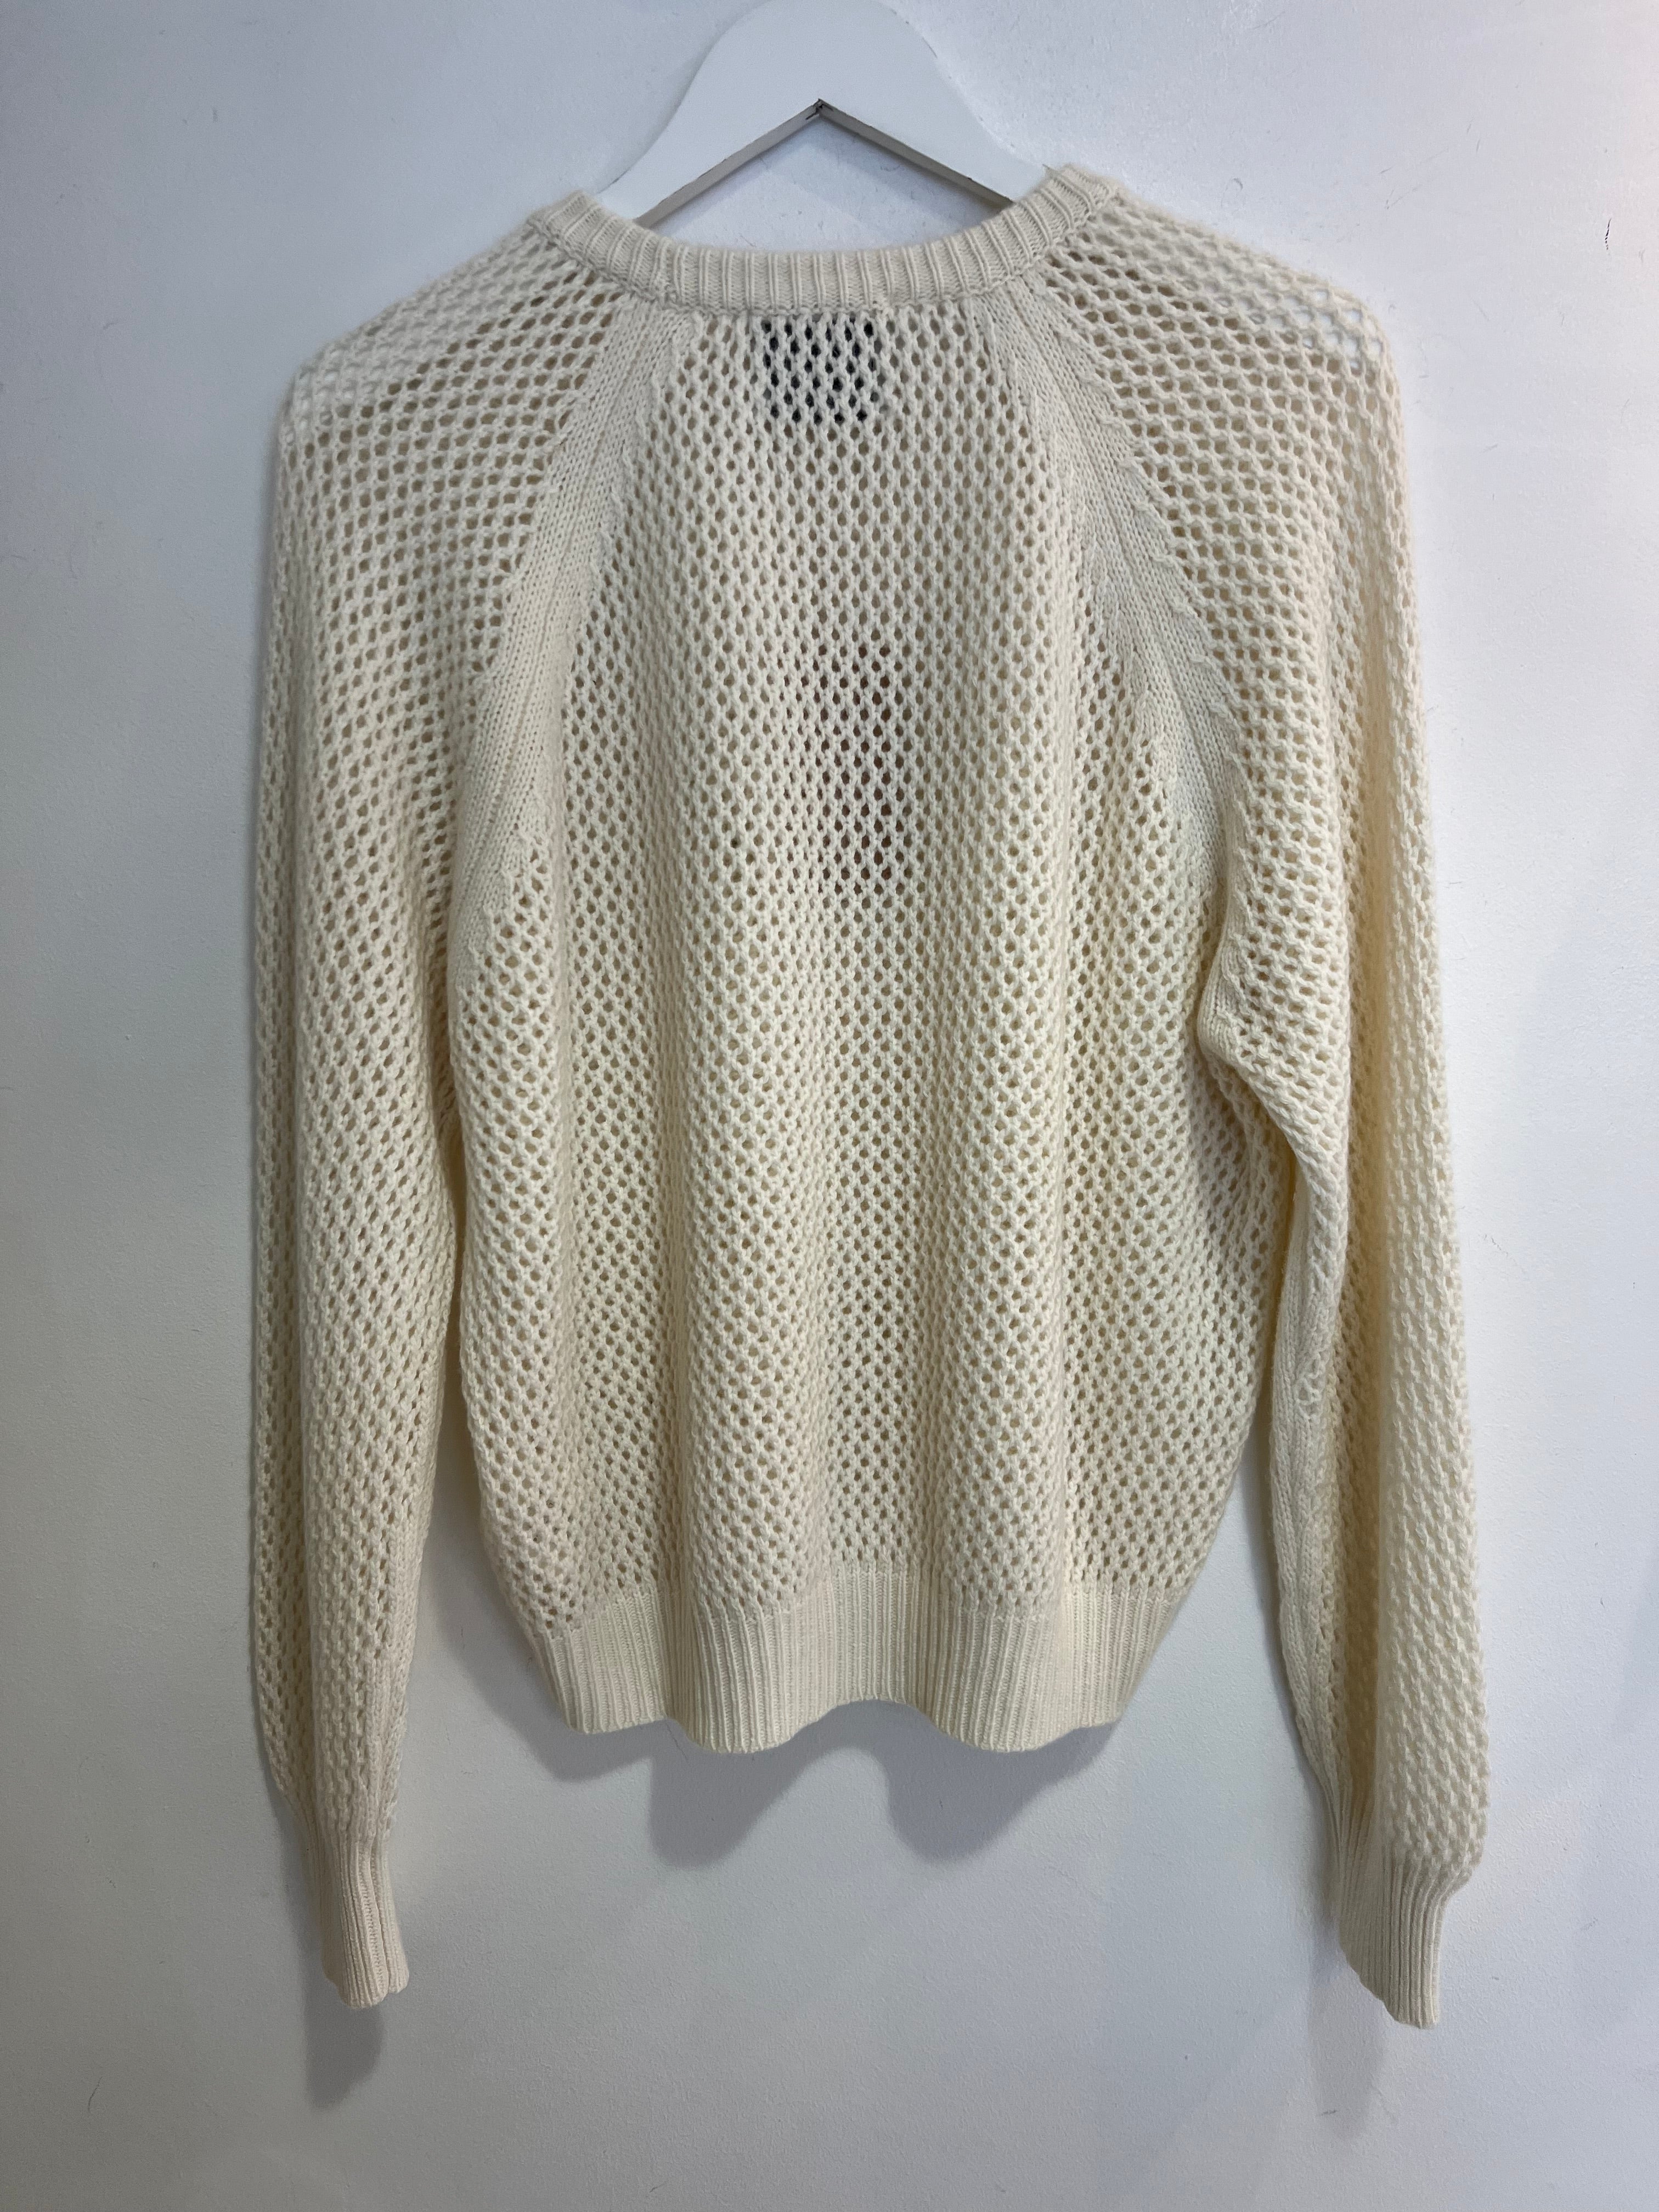  Hetre Alresford Hampshire clothes store n.o.w White Crochet Ragland Sleeve Sweater